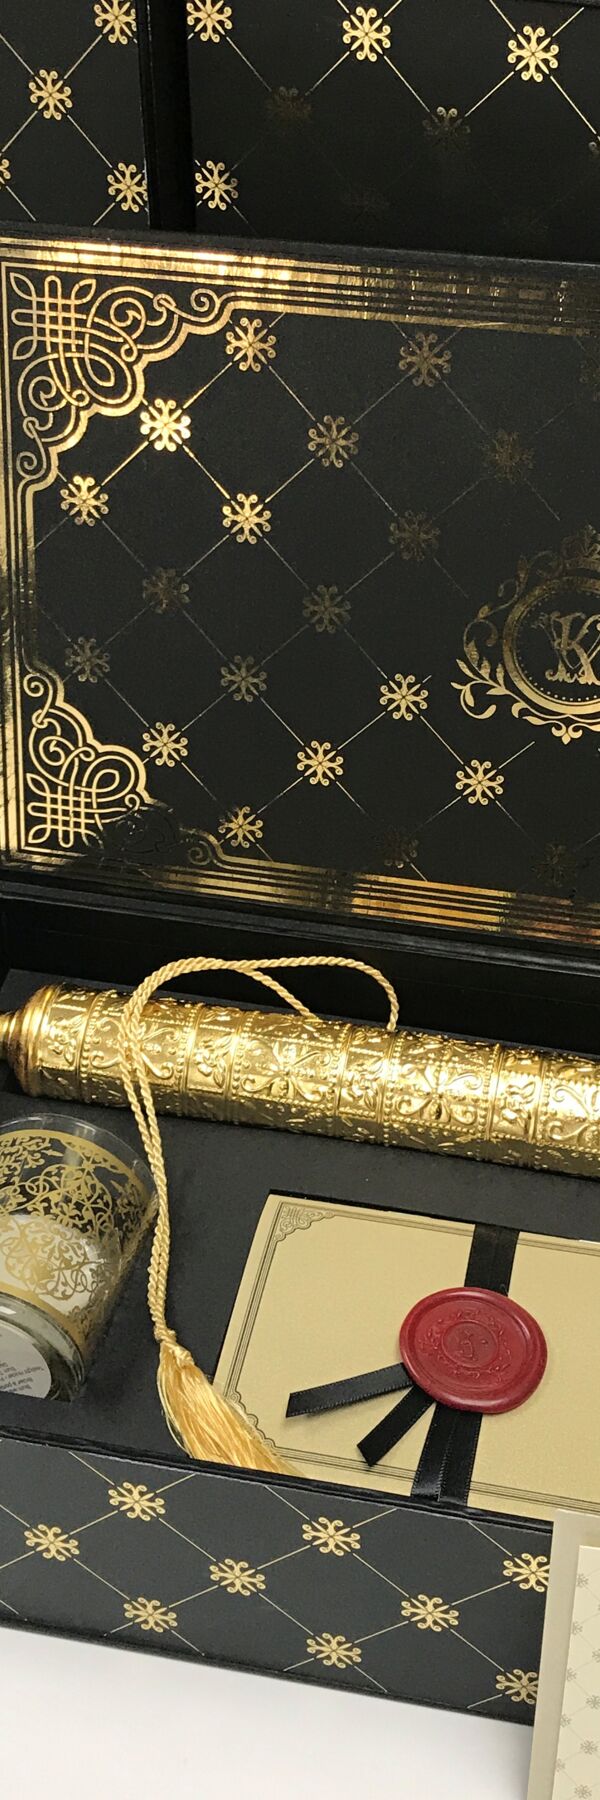 Black and gold boxed scroll invitation2.JPG Thumbnail